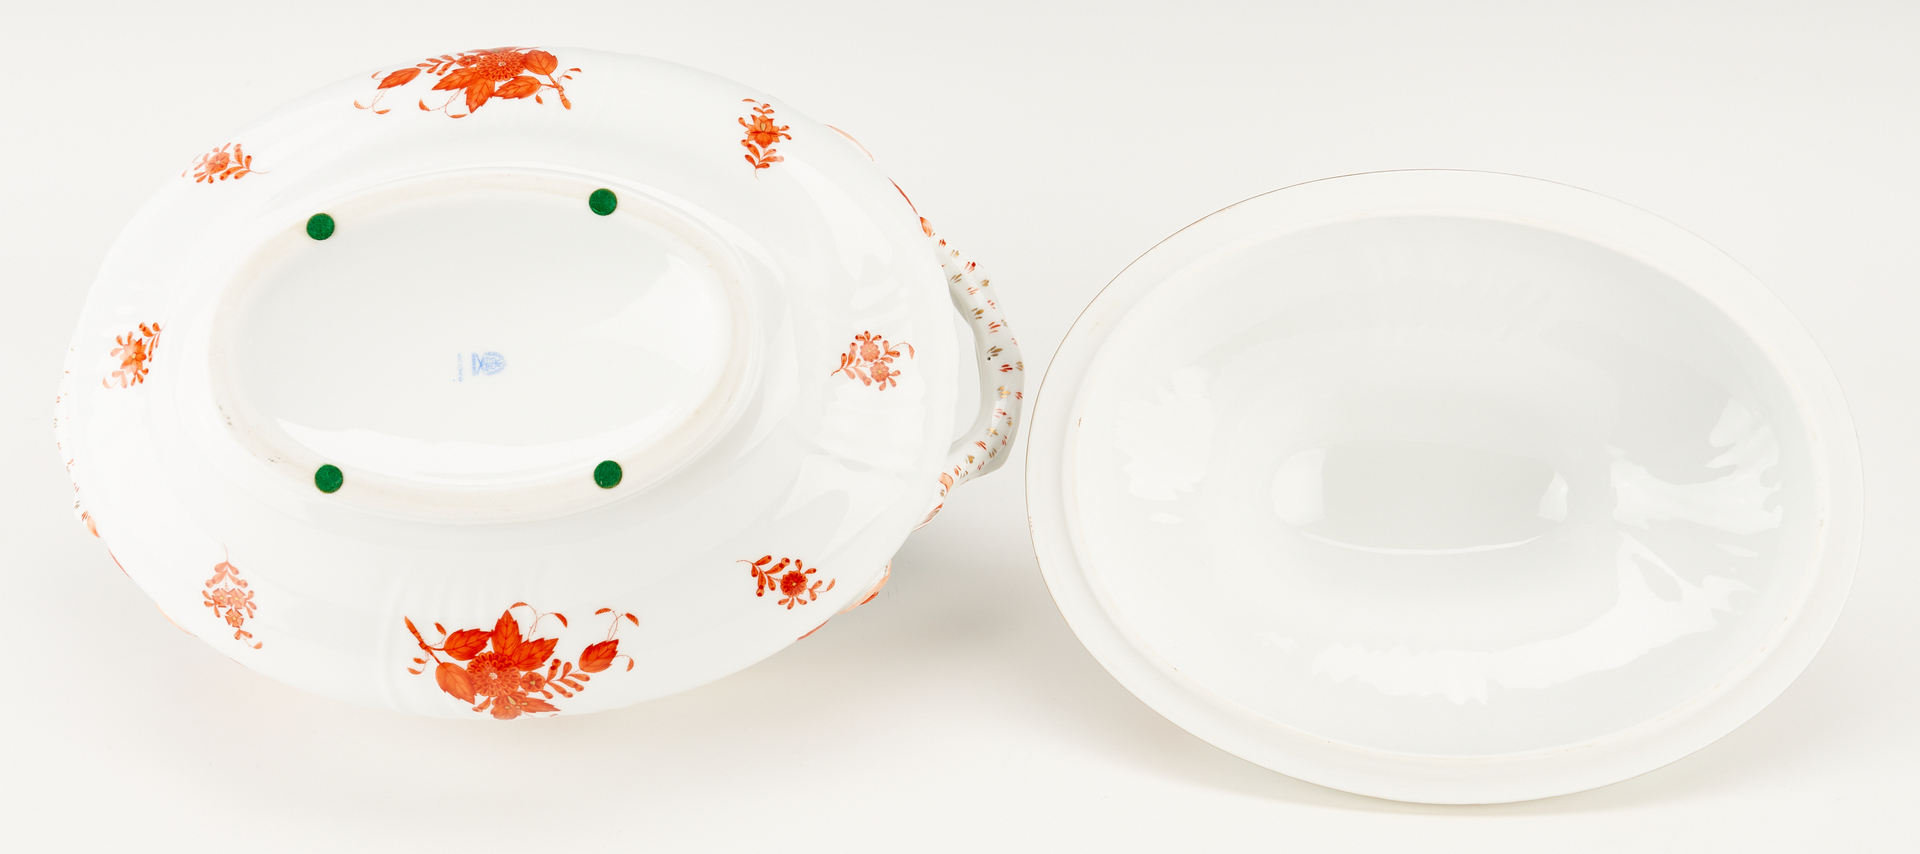 Lot 369: 20 Pcs. Herend Chinese Bouquet Porcelain Asst. Table Items